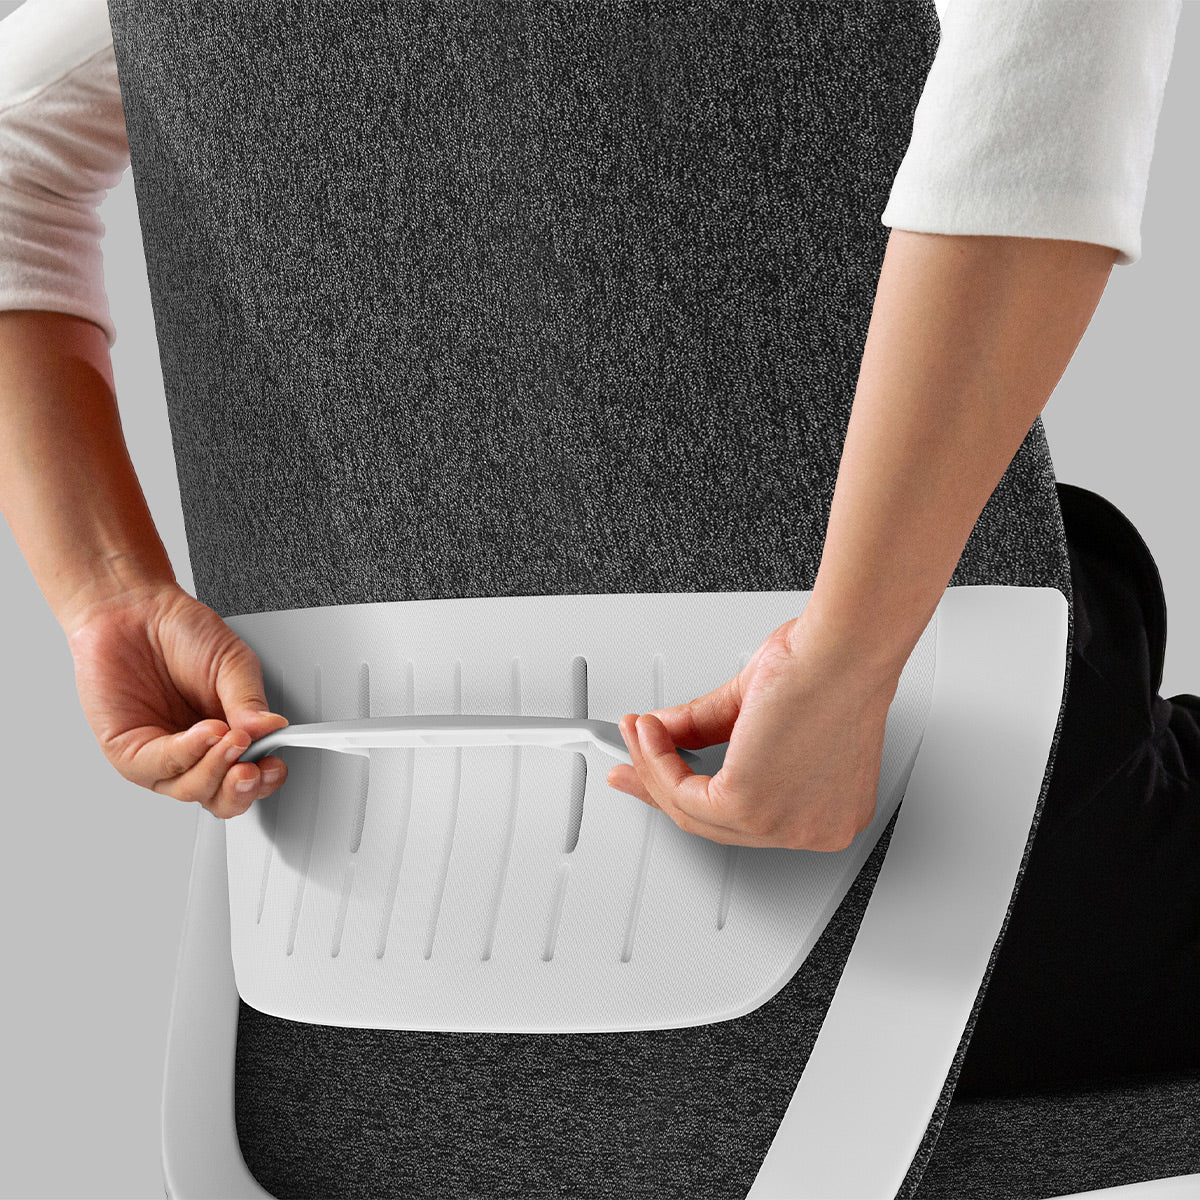 BDI Coda 3522 Ergonomic Task Chair with High-Performance Mesh Fabric (Oyster & Grey)